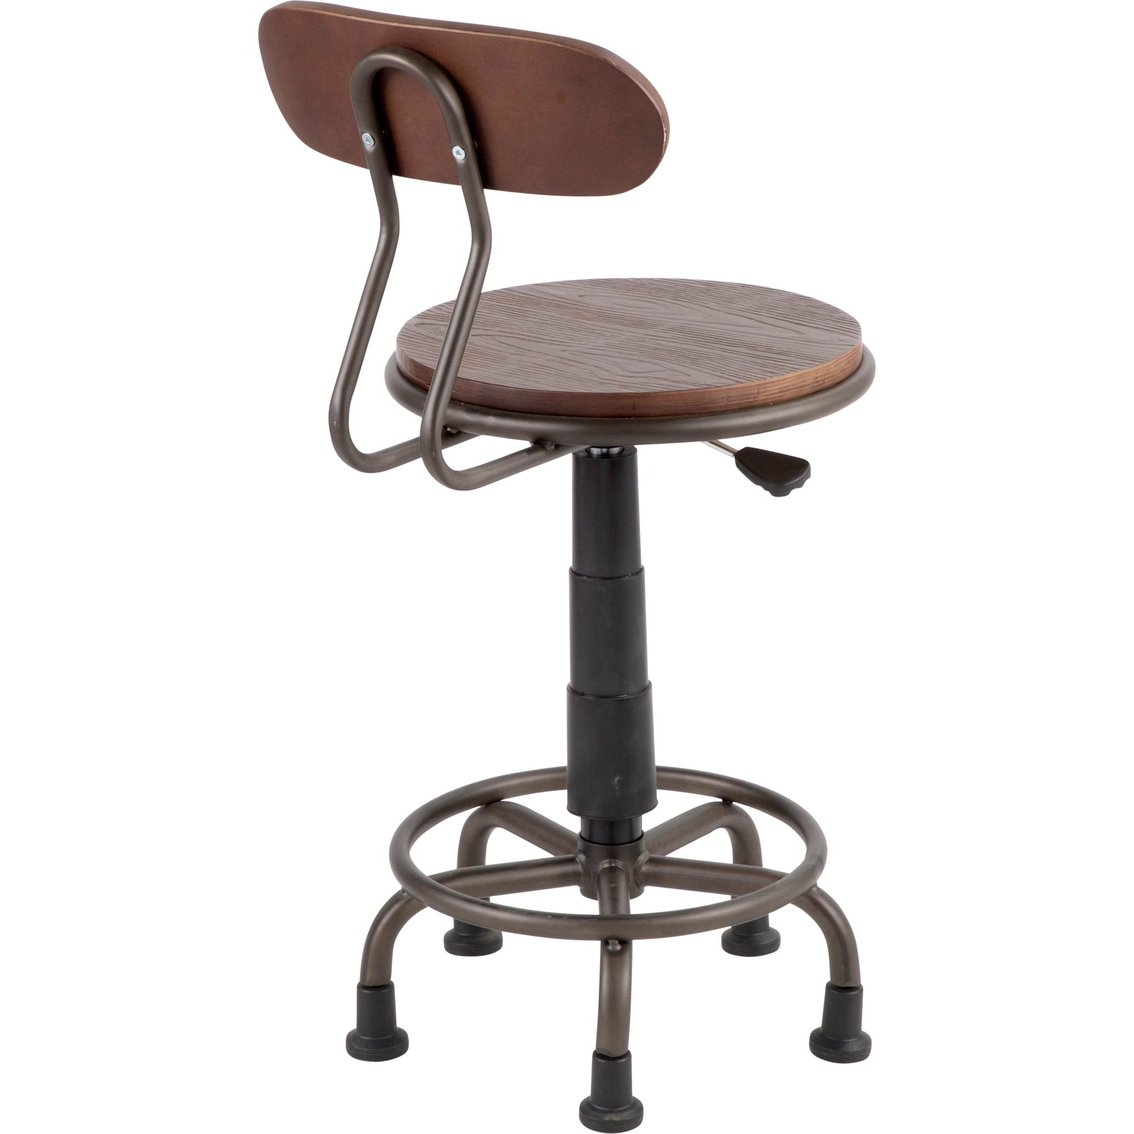 LumiSource Dakota Adjustable Task Chair - Image 2 of 3